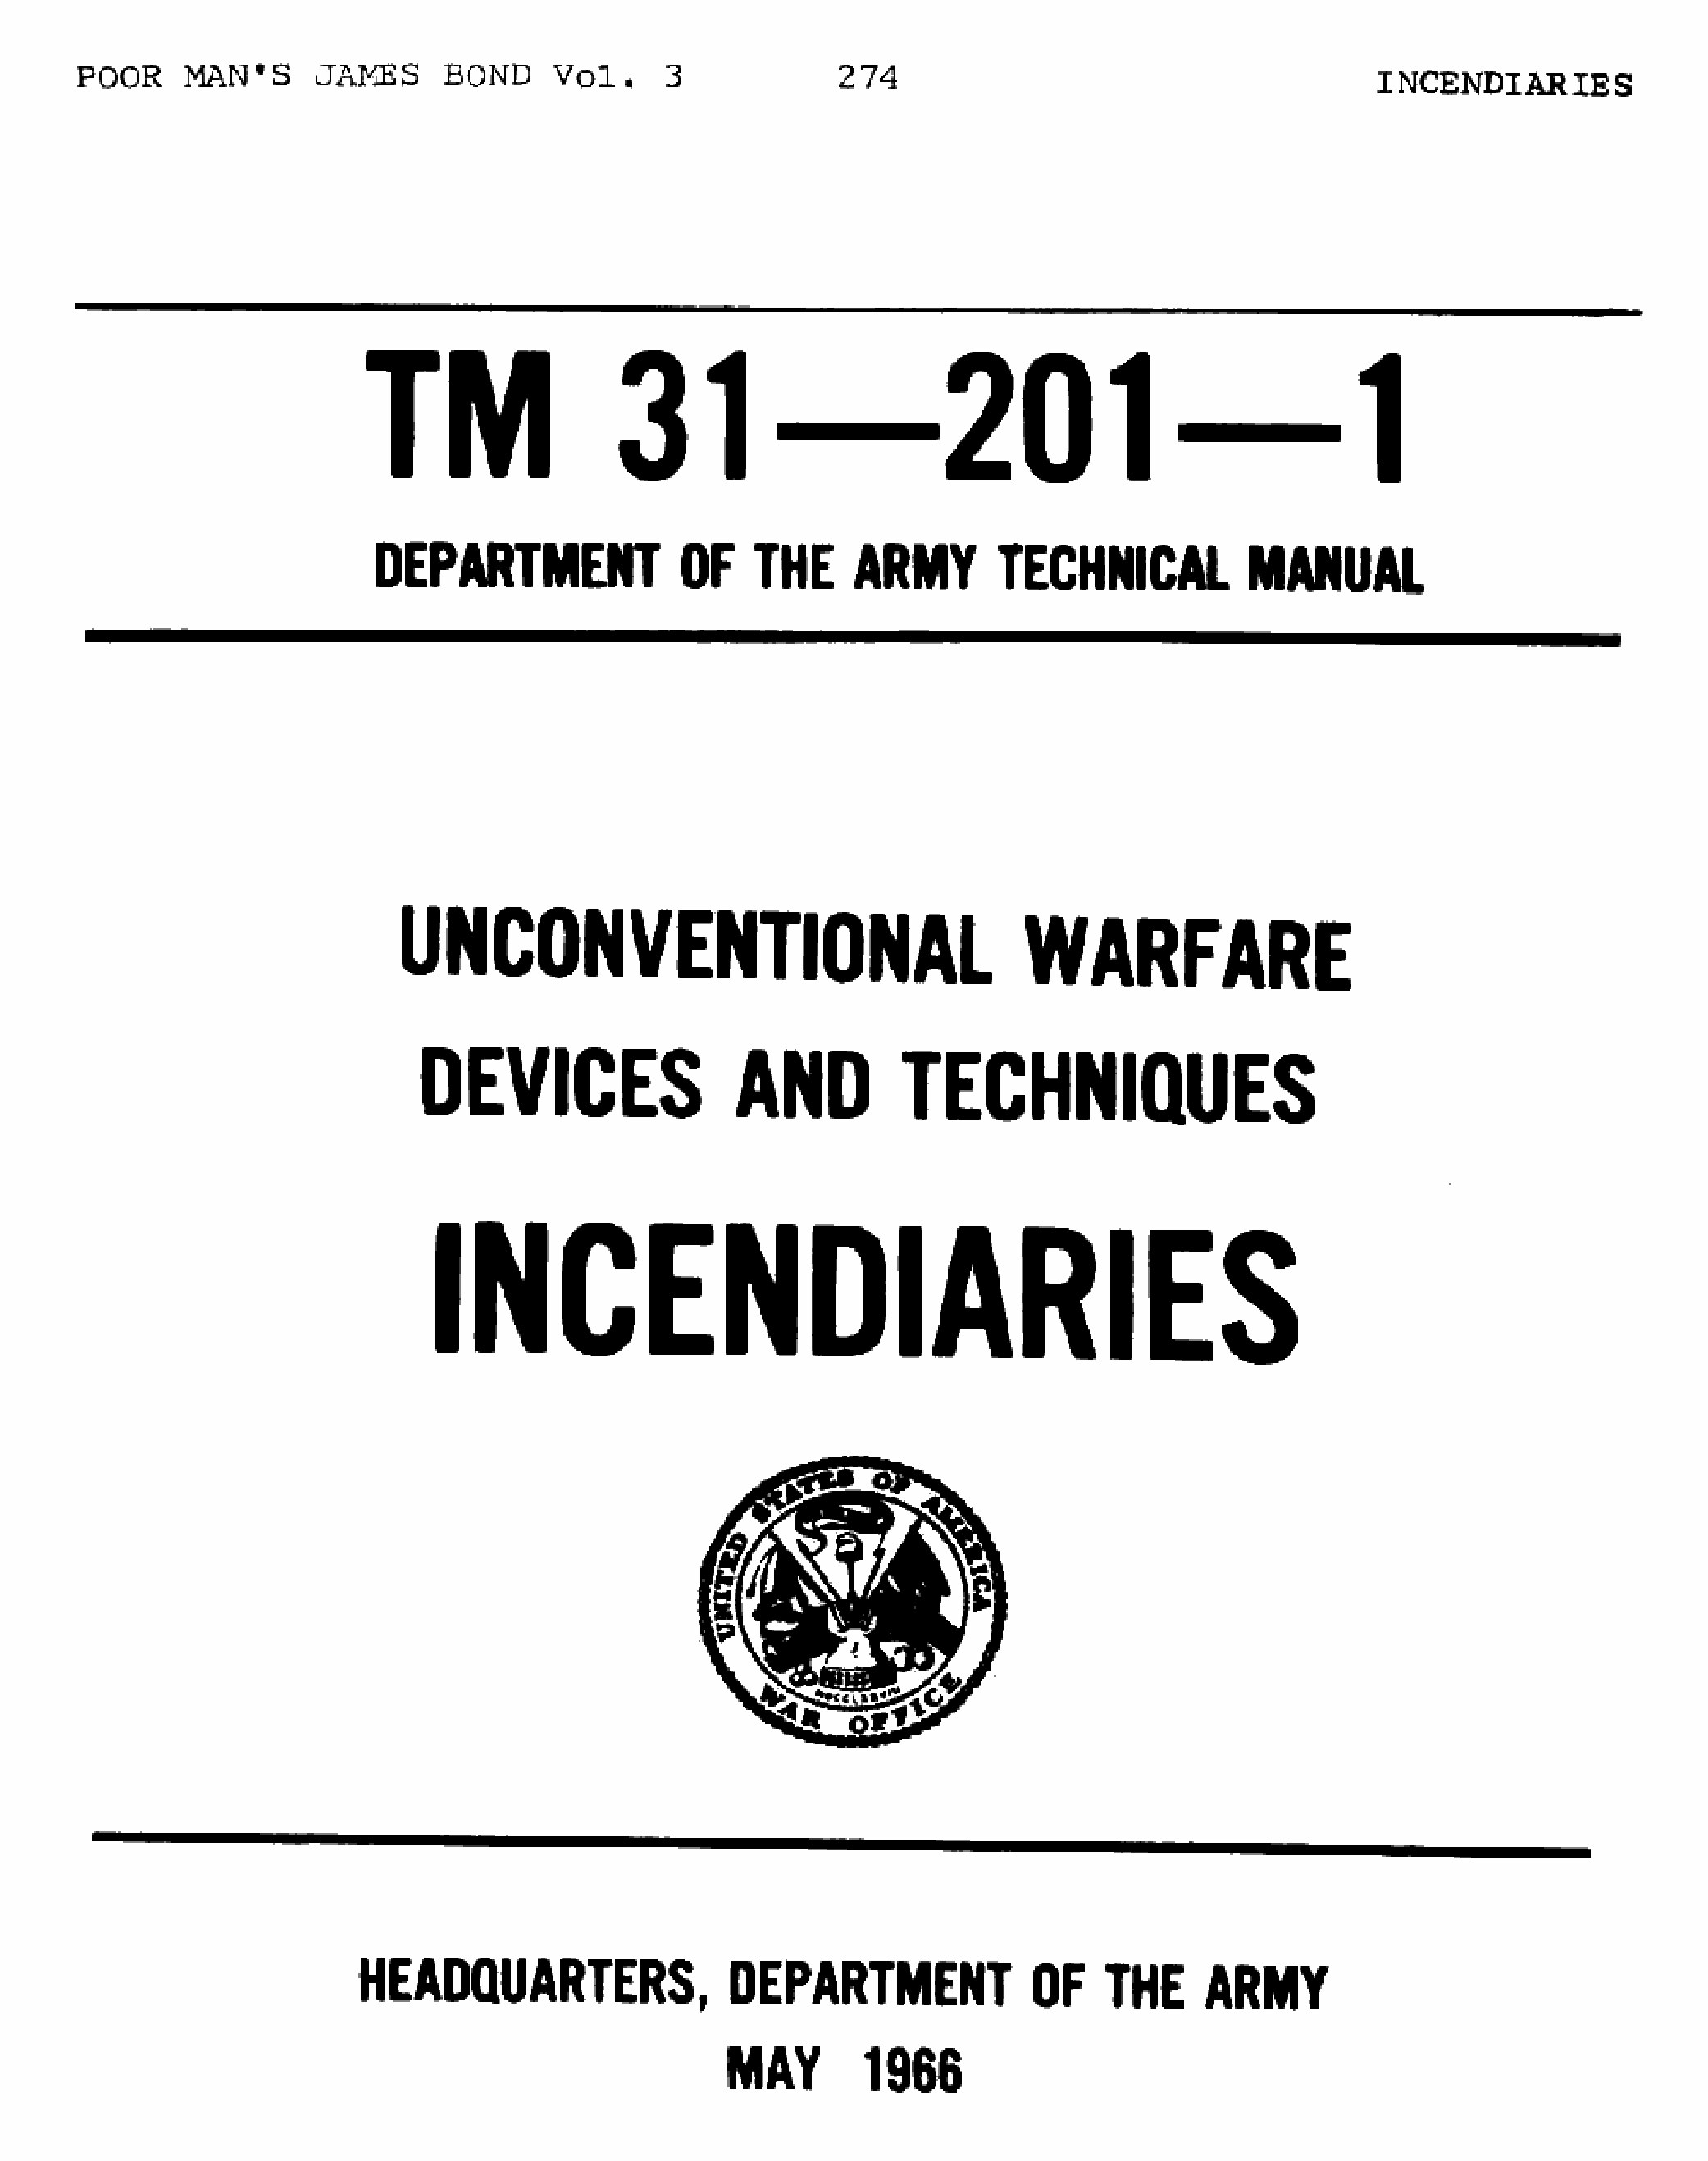 TM 31-201-1 Unconventional Warfare Devices and Techniques - Incendiaries